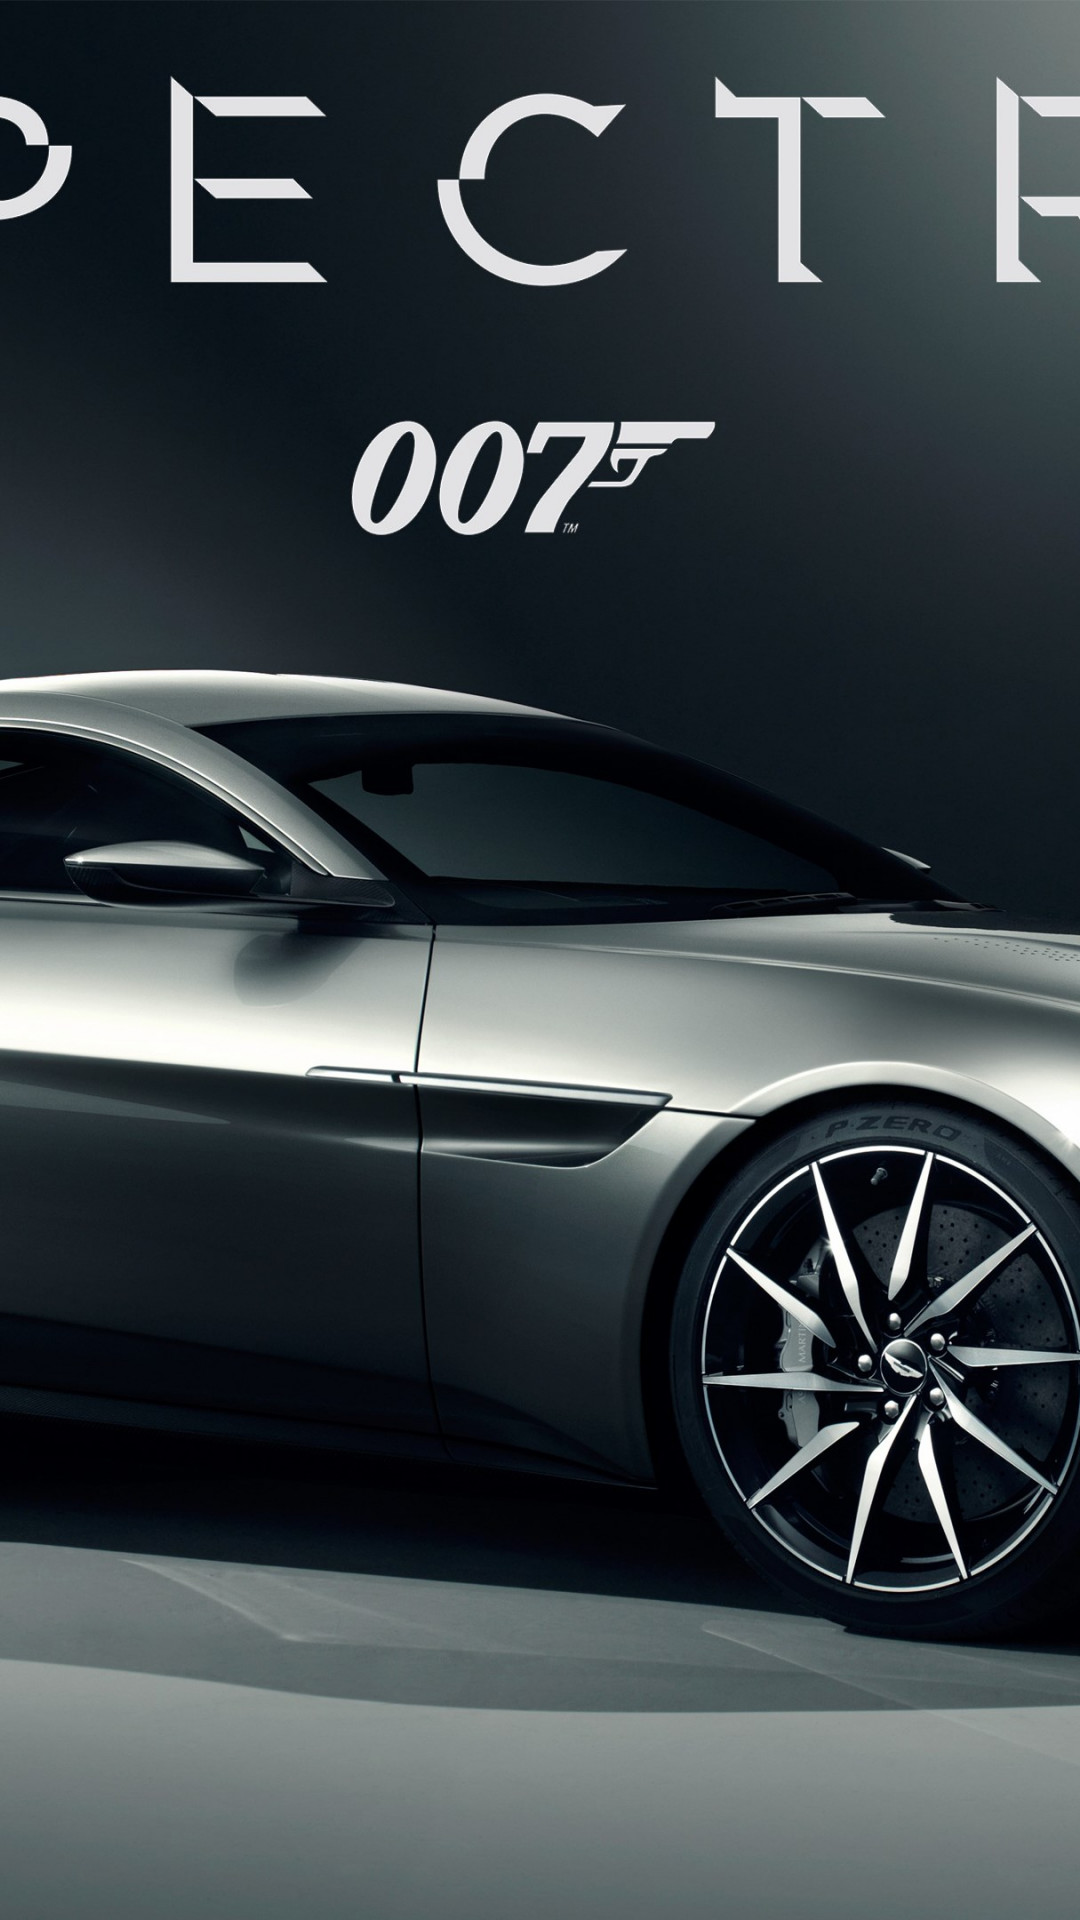 Aston Martin DB10 007 Spectre car wallpaper 1080x1920